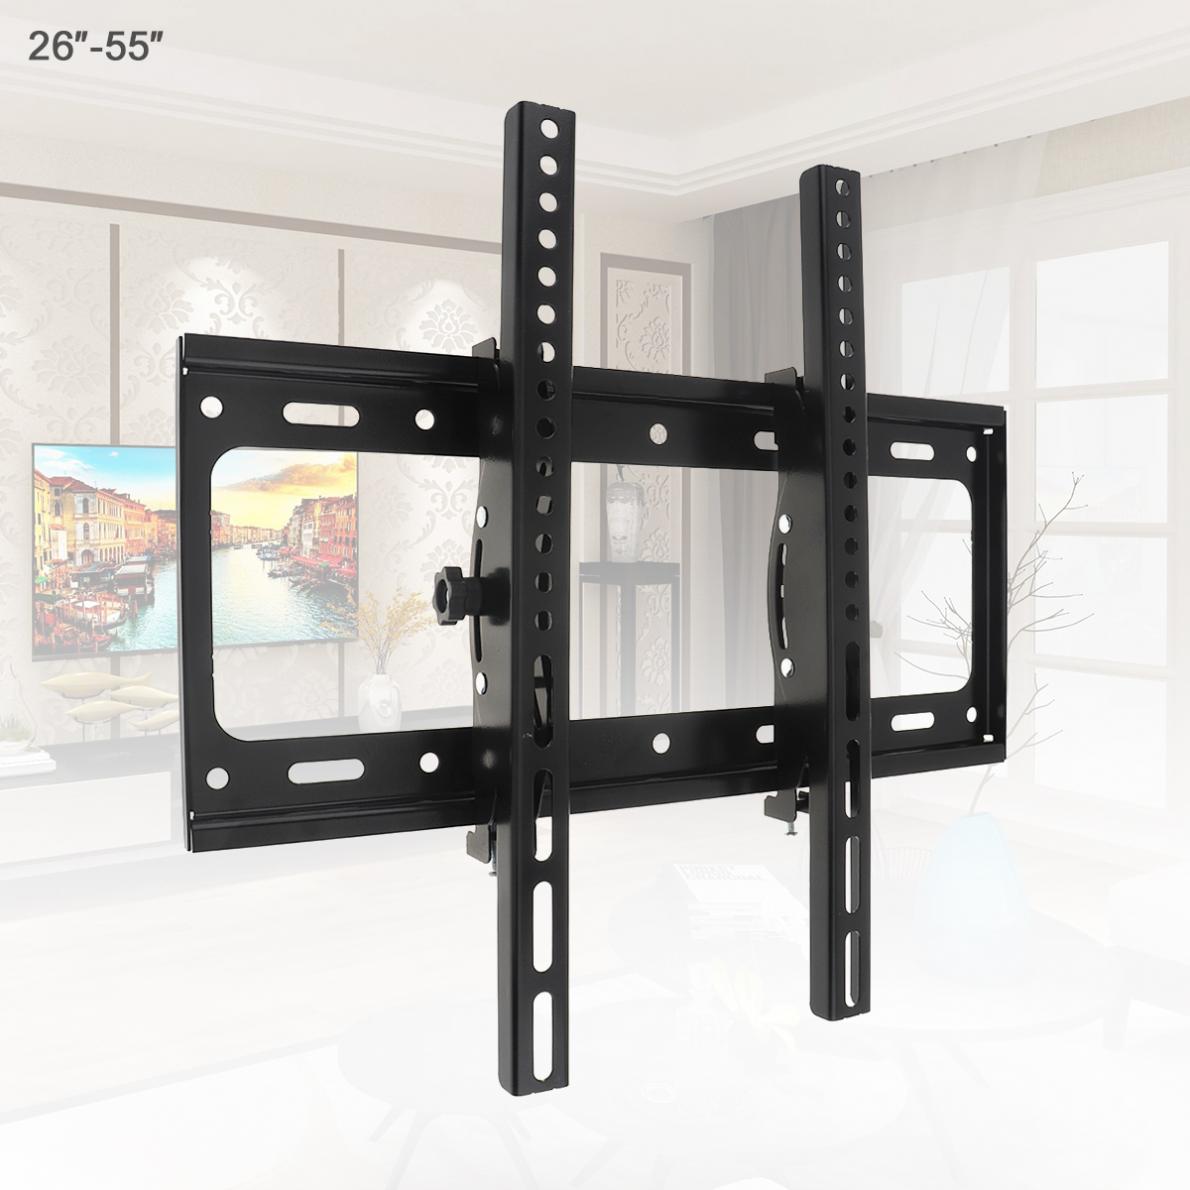 Universal 50KG Adjustable TV Wall Mount Bracket Flat Panel TV Frame Support 15 Degrees Tilt with Level for 26 - 55 Inch LCD LED